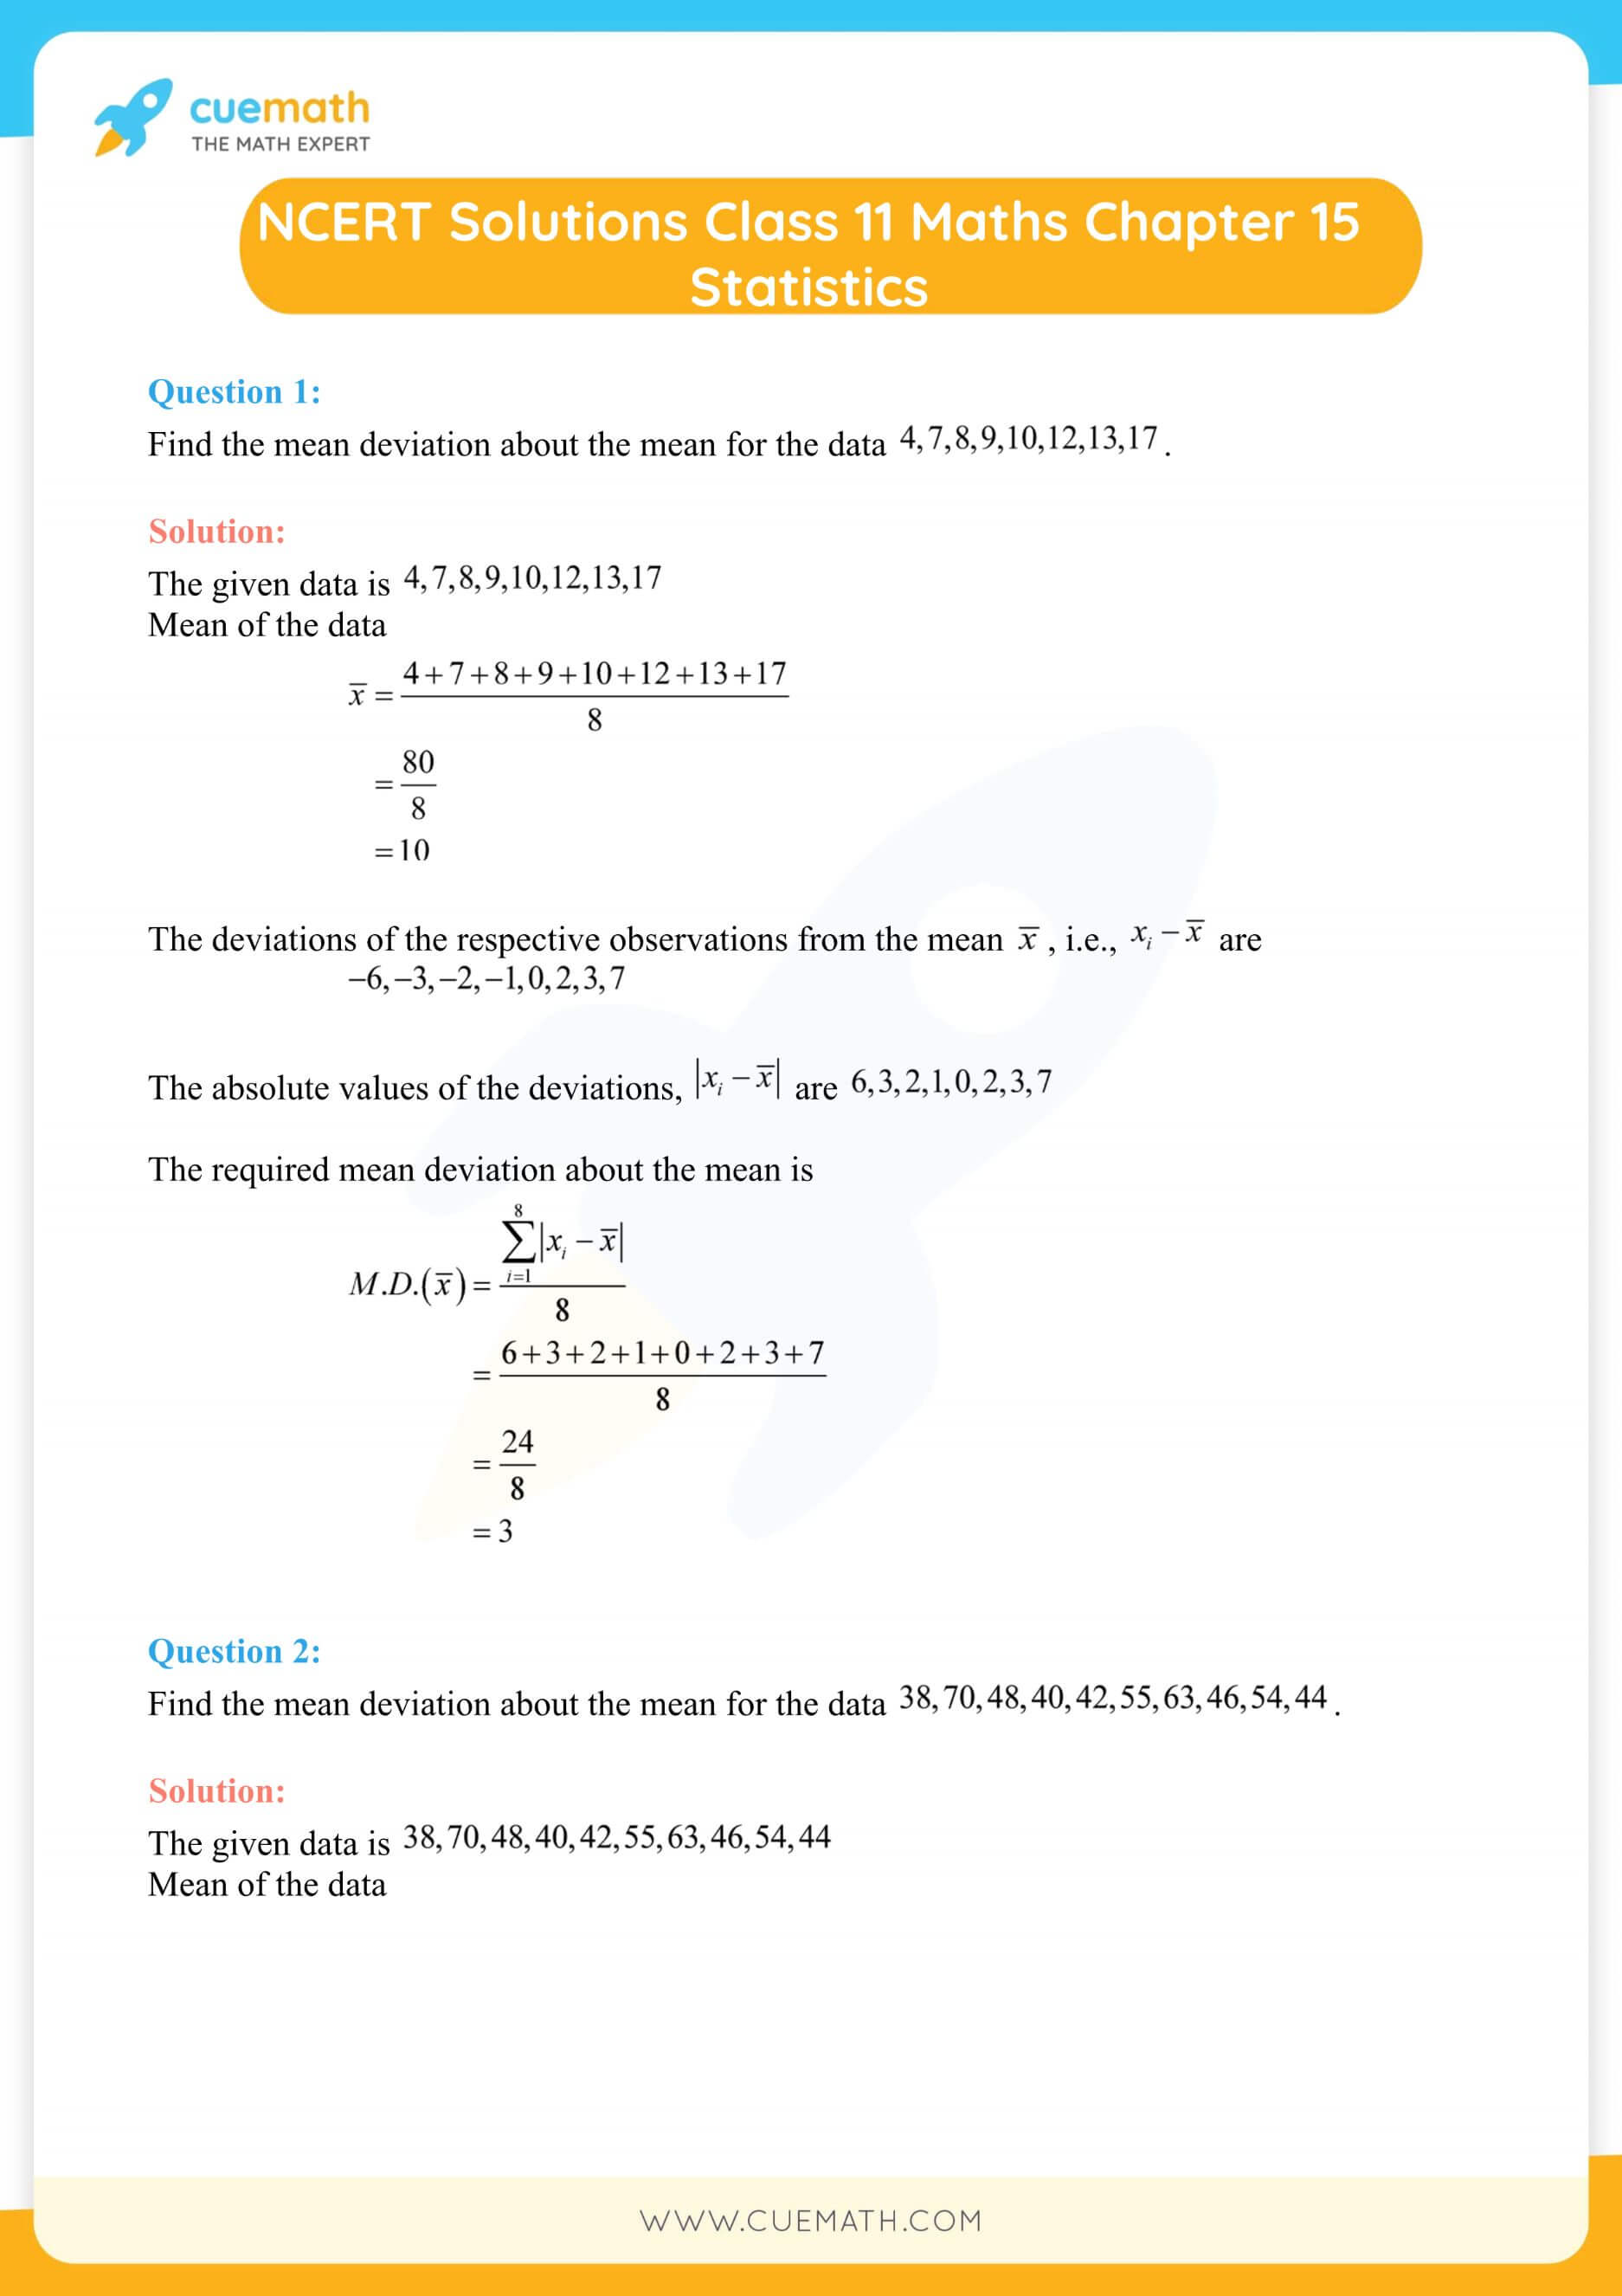 NCERT Solutions Class 11 Maths Chapter 15 Exercise 15.1 1